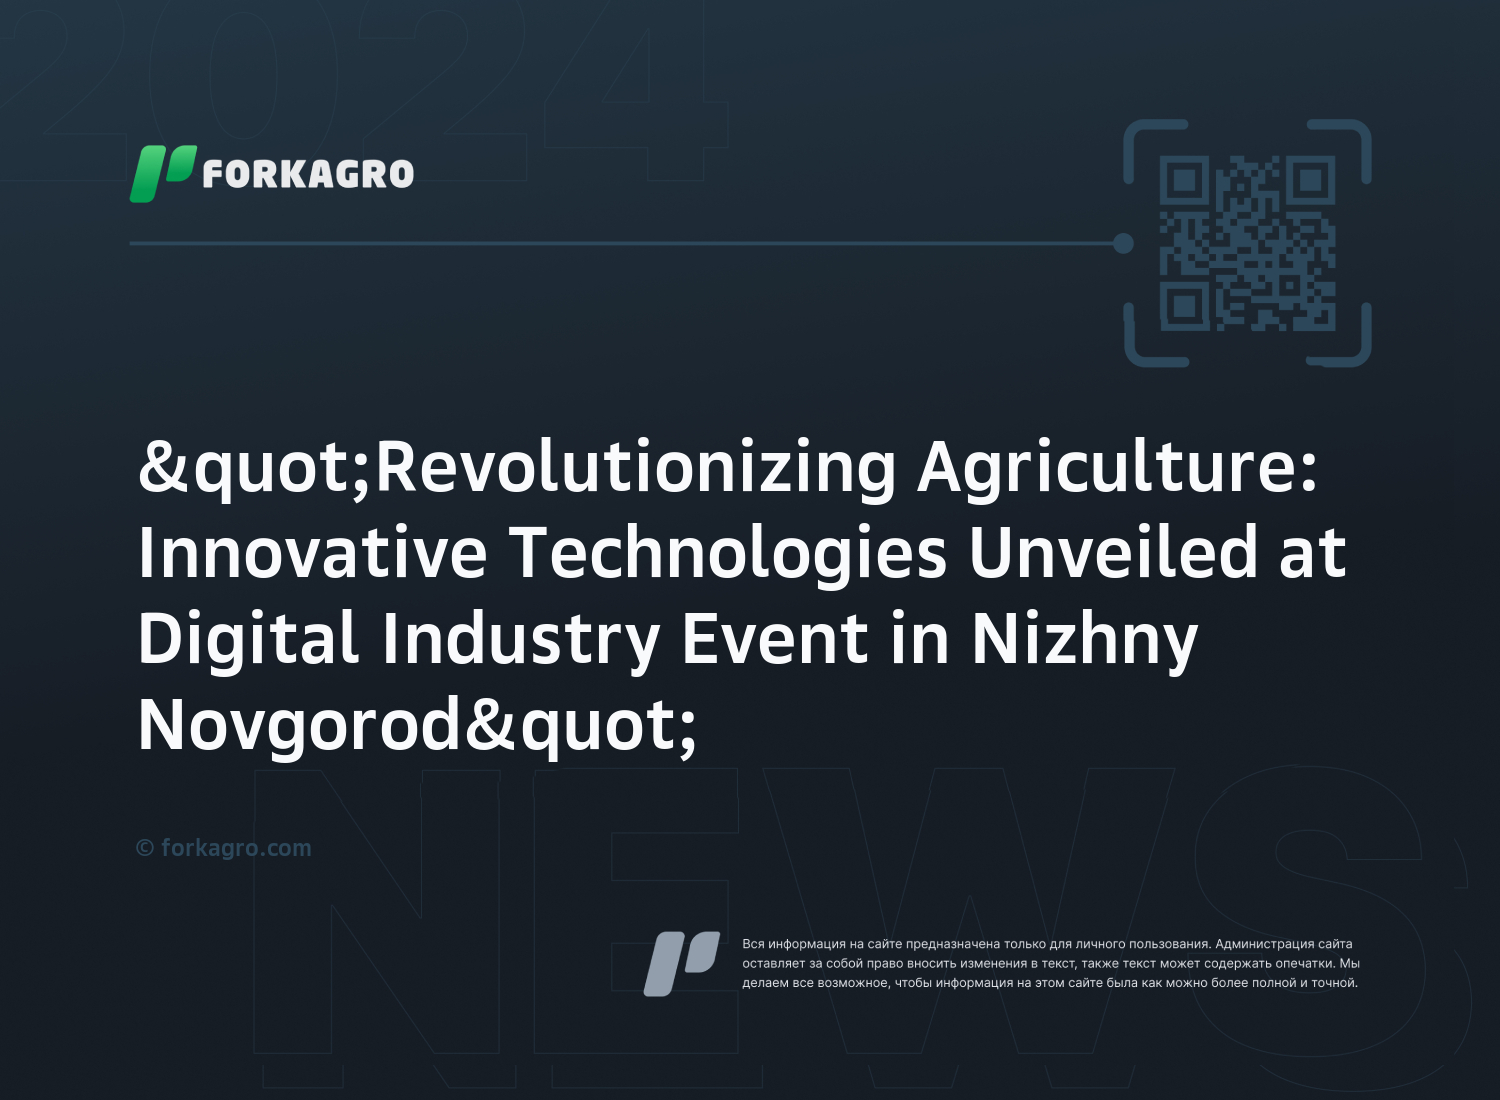 "Revolutionizing Agriculture: Innovative Technologies Unveiled at Digital Industry Event in Nizhny Novgorod"